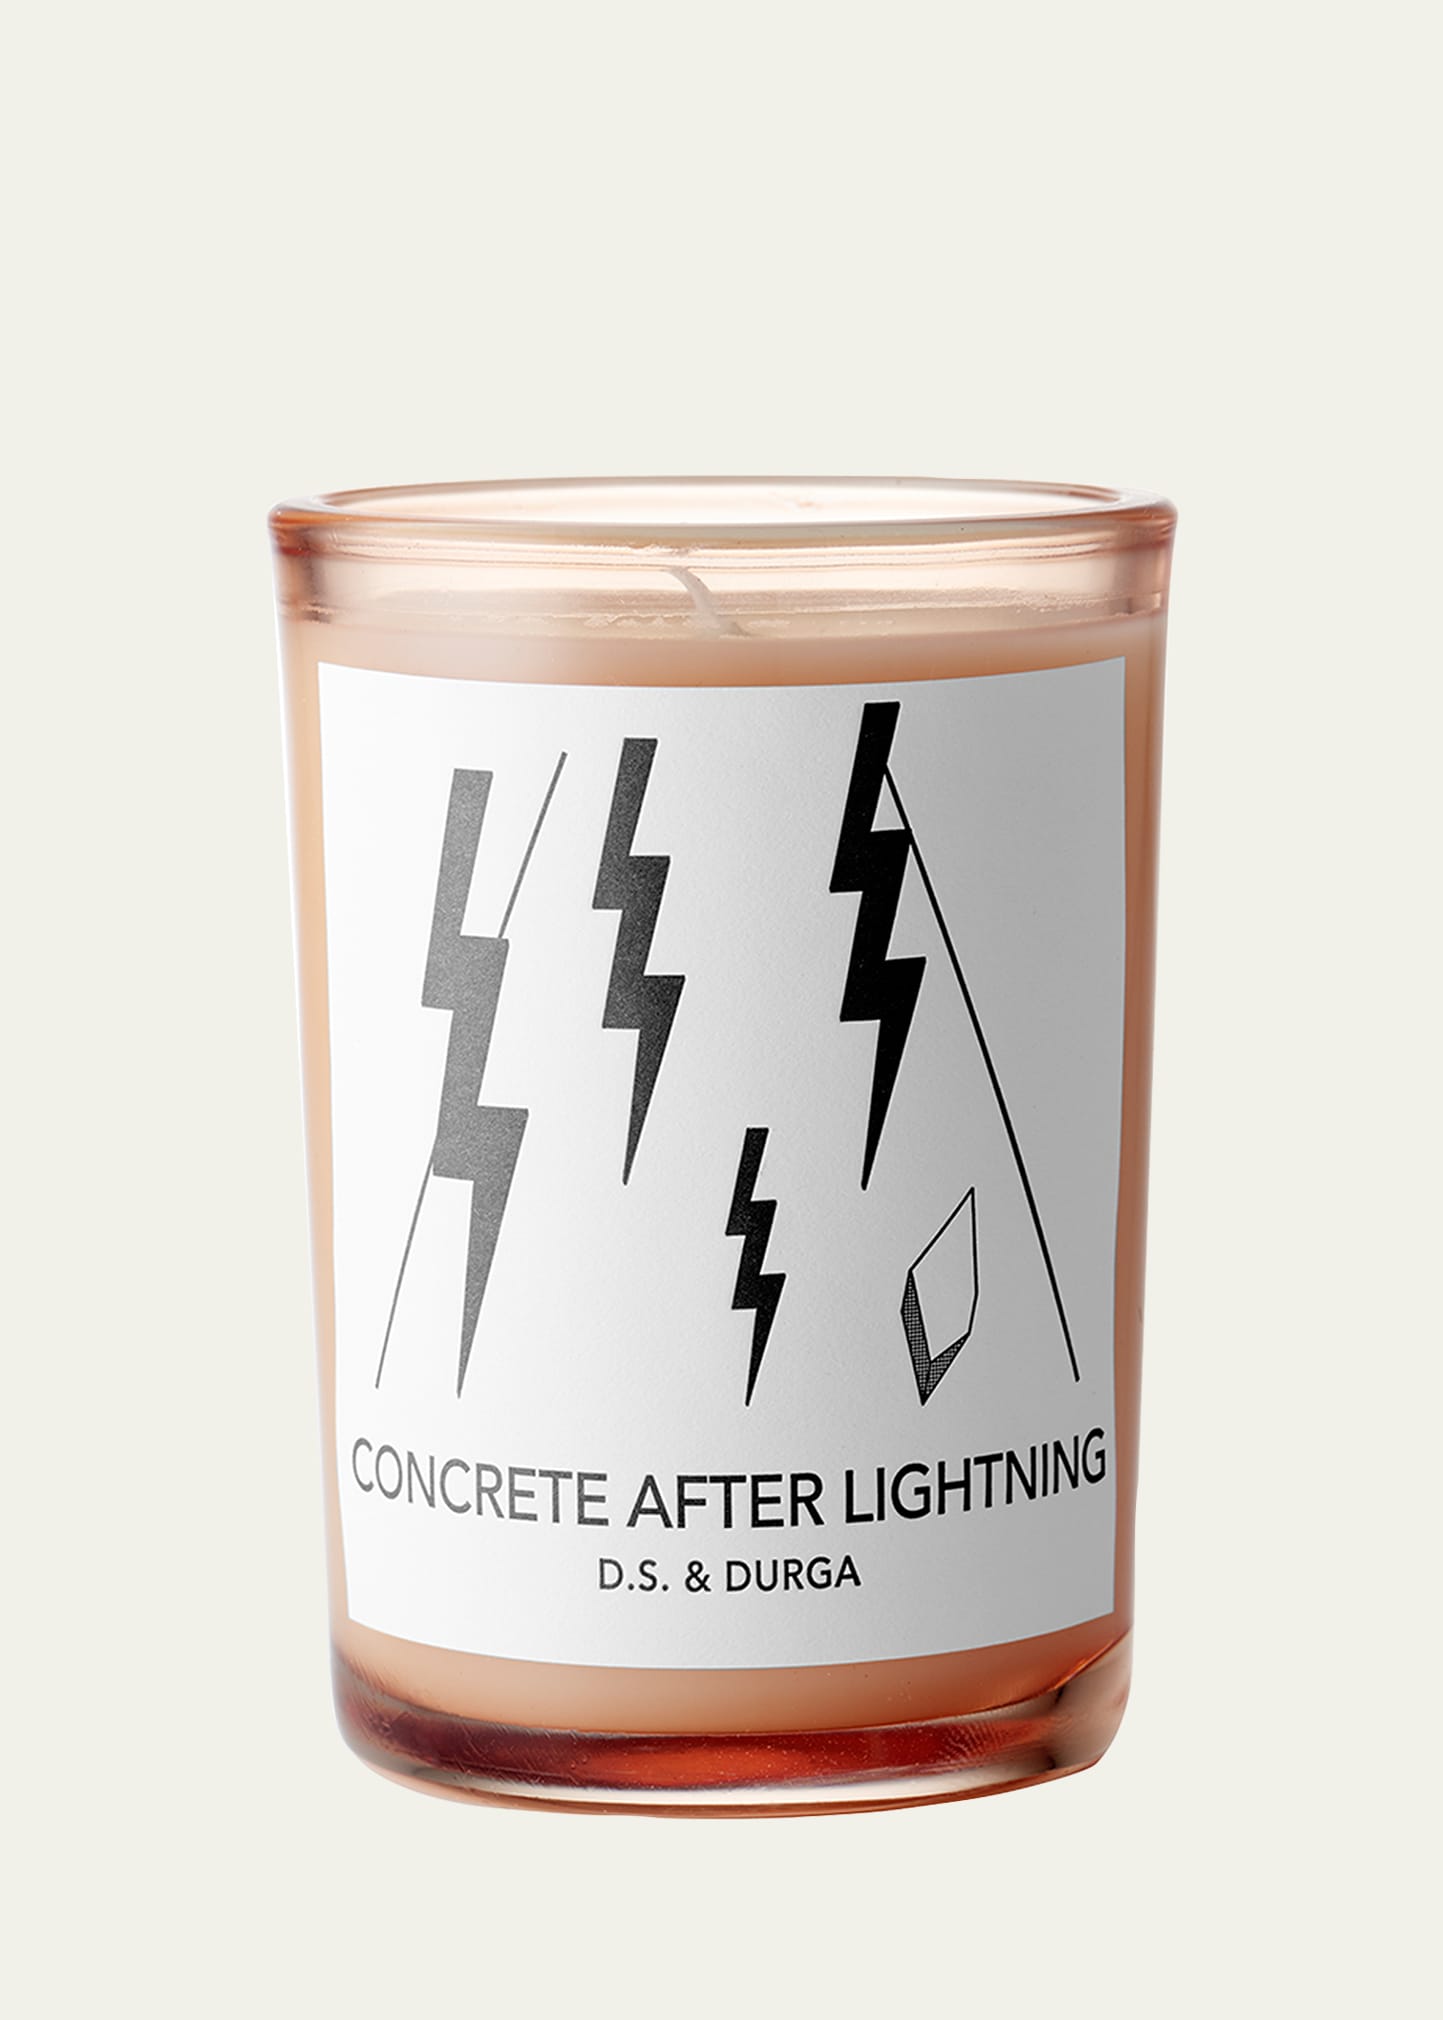 7 oz. Concrete After Lightning Candle